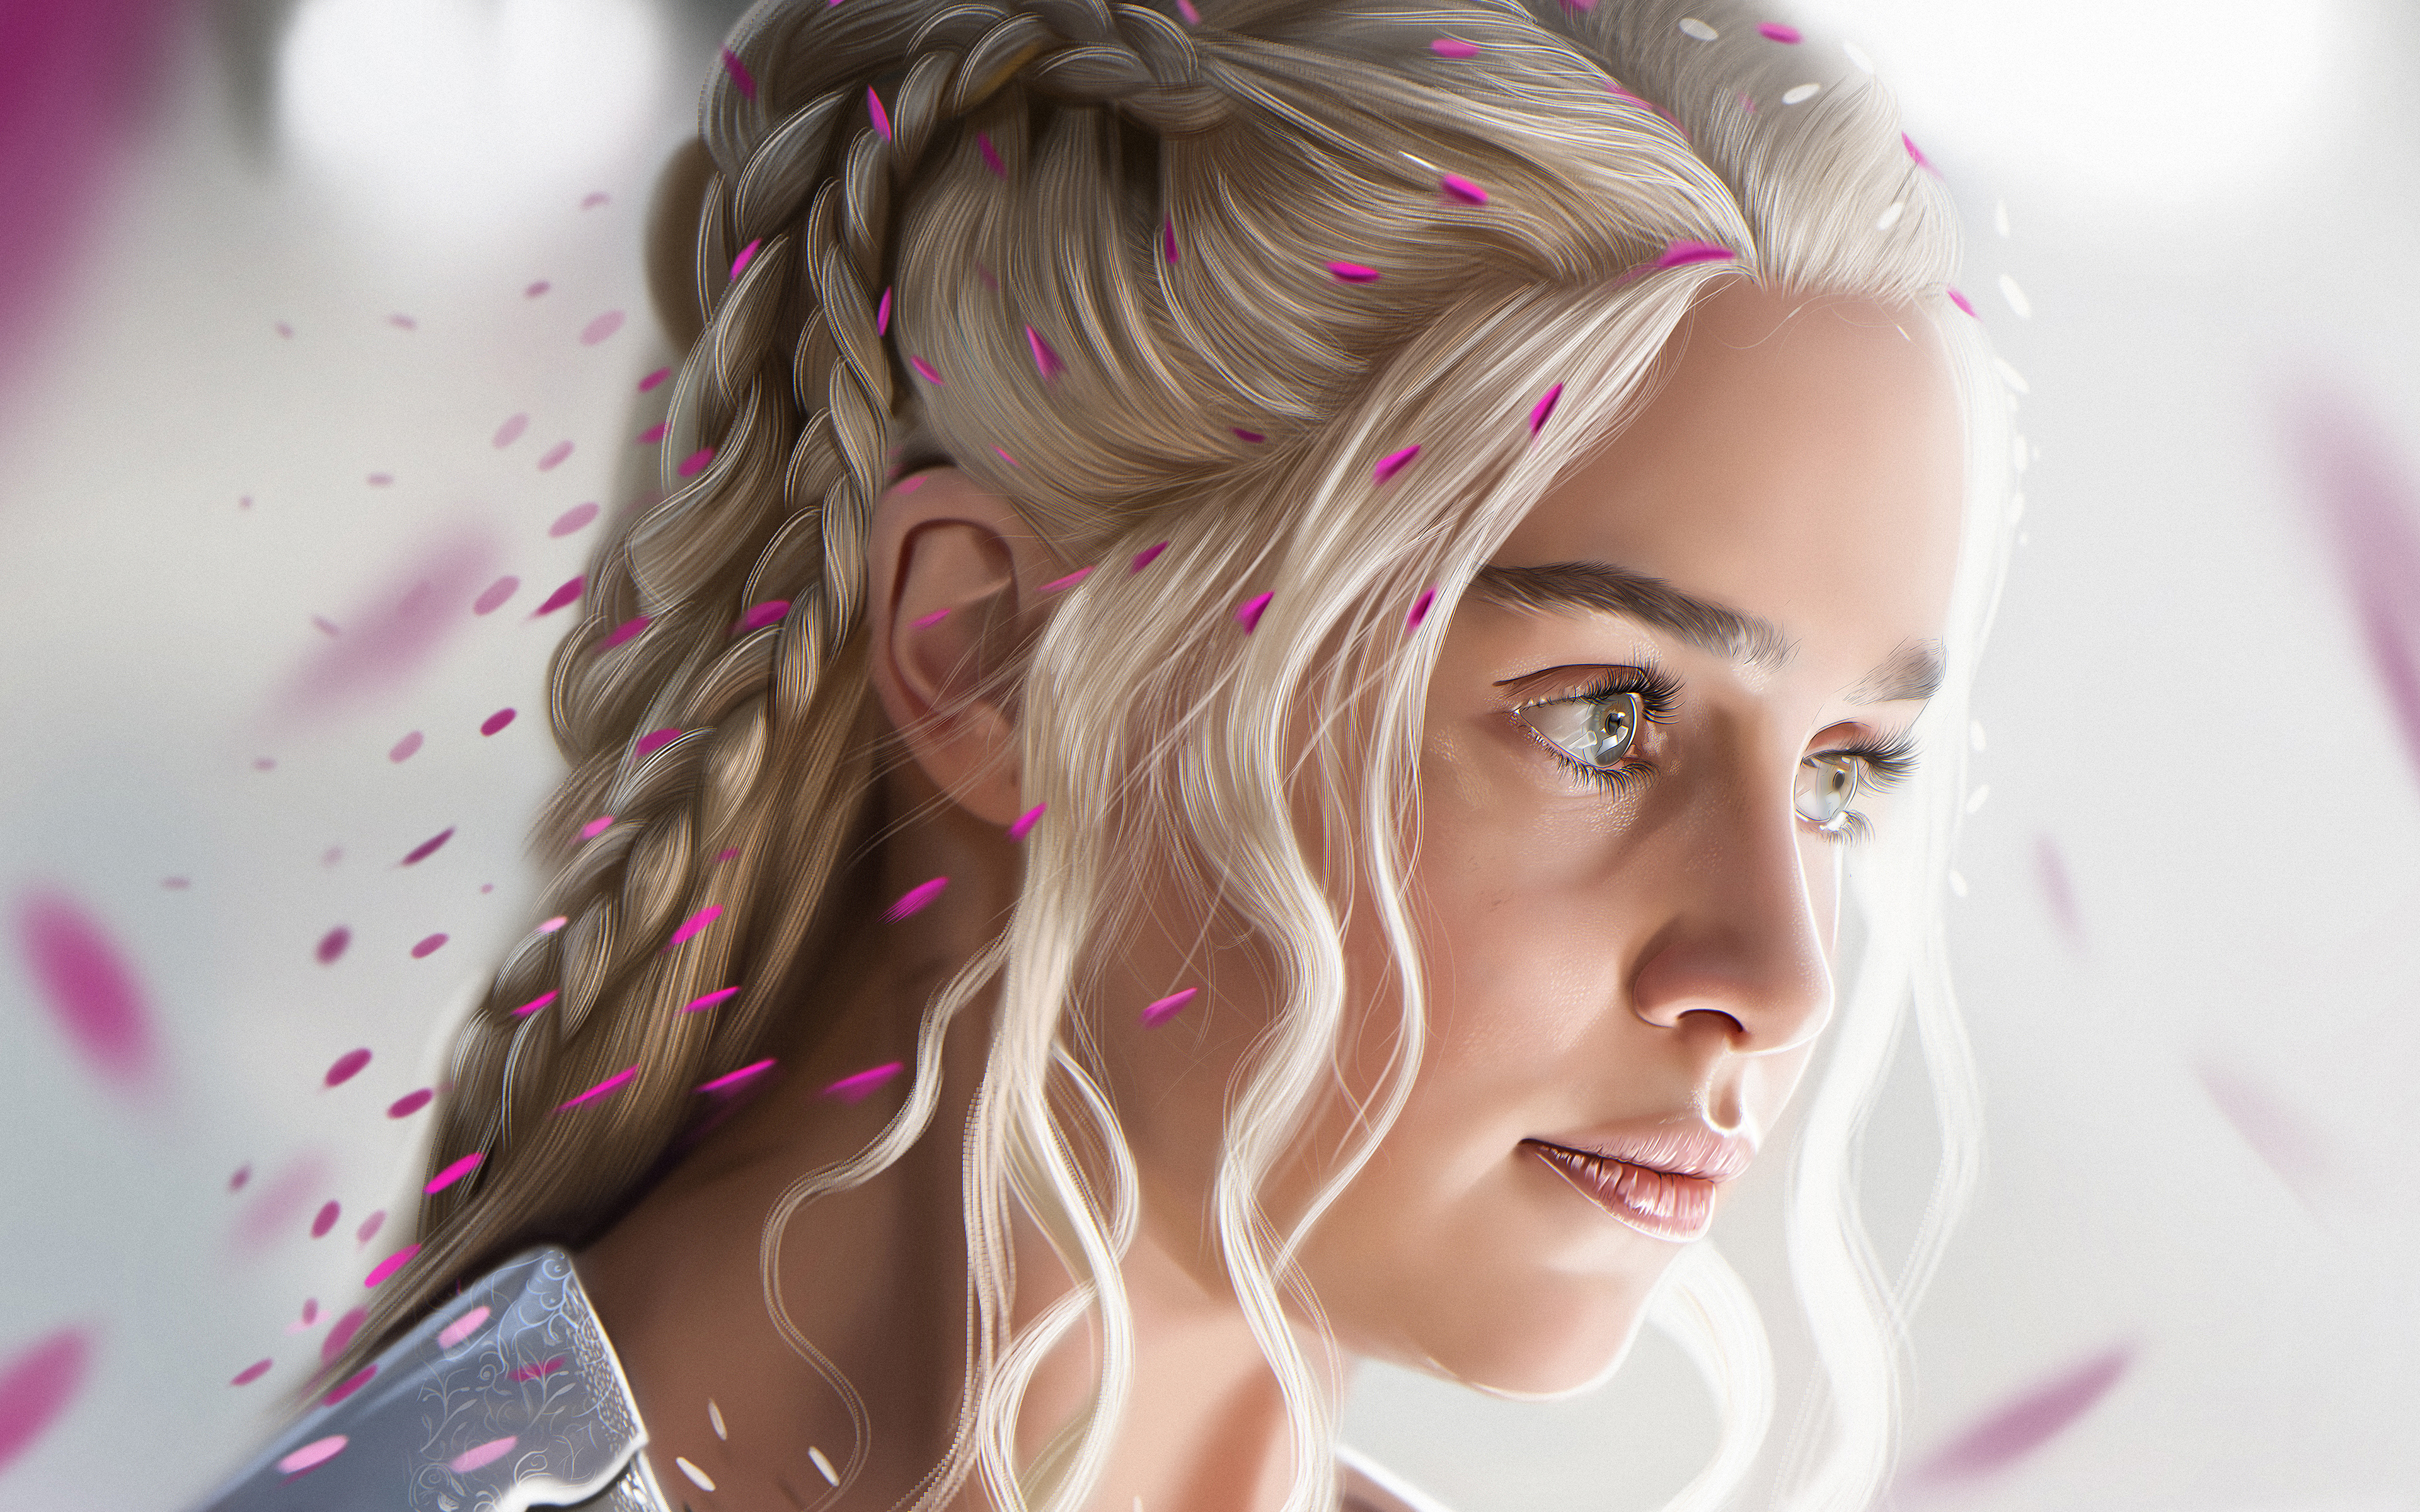 Daenerys Targaryen, Emilia Clarke, Game of Thrones, Digital art Wallpaper